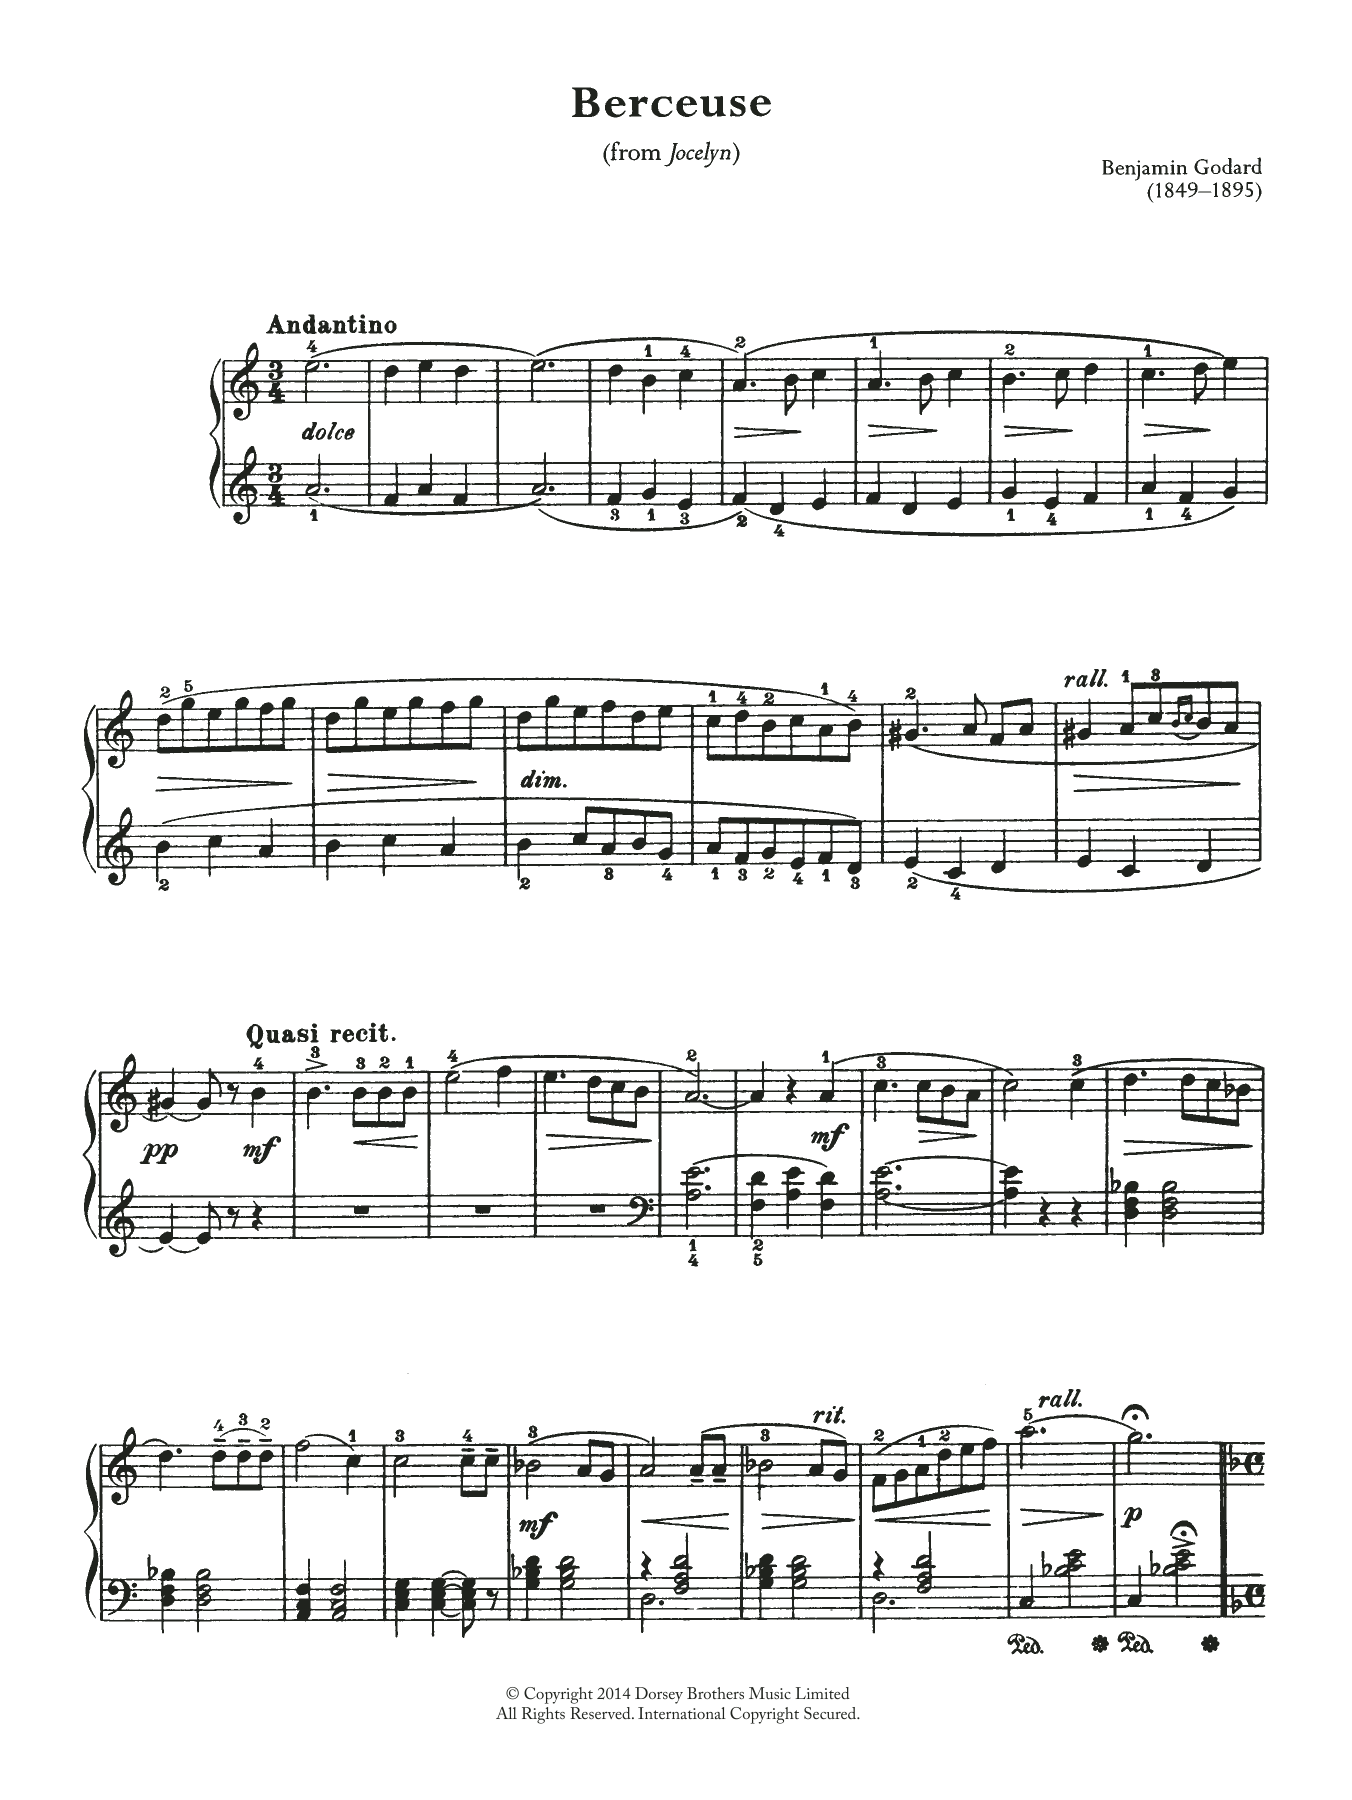 Benjamin Godard Berceuse (From Jocelyn) Sheet Music Notes & Chords for Piano - Download or Print PDF